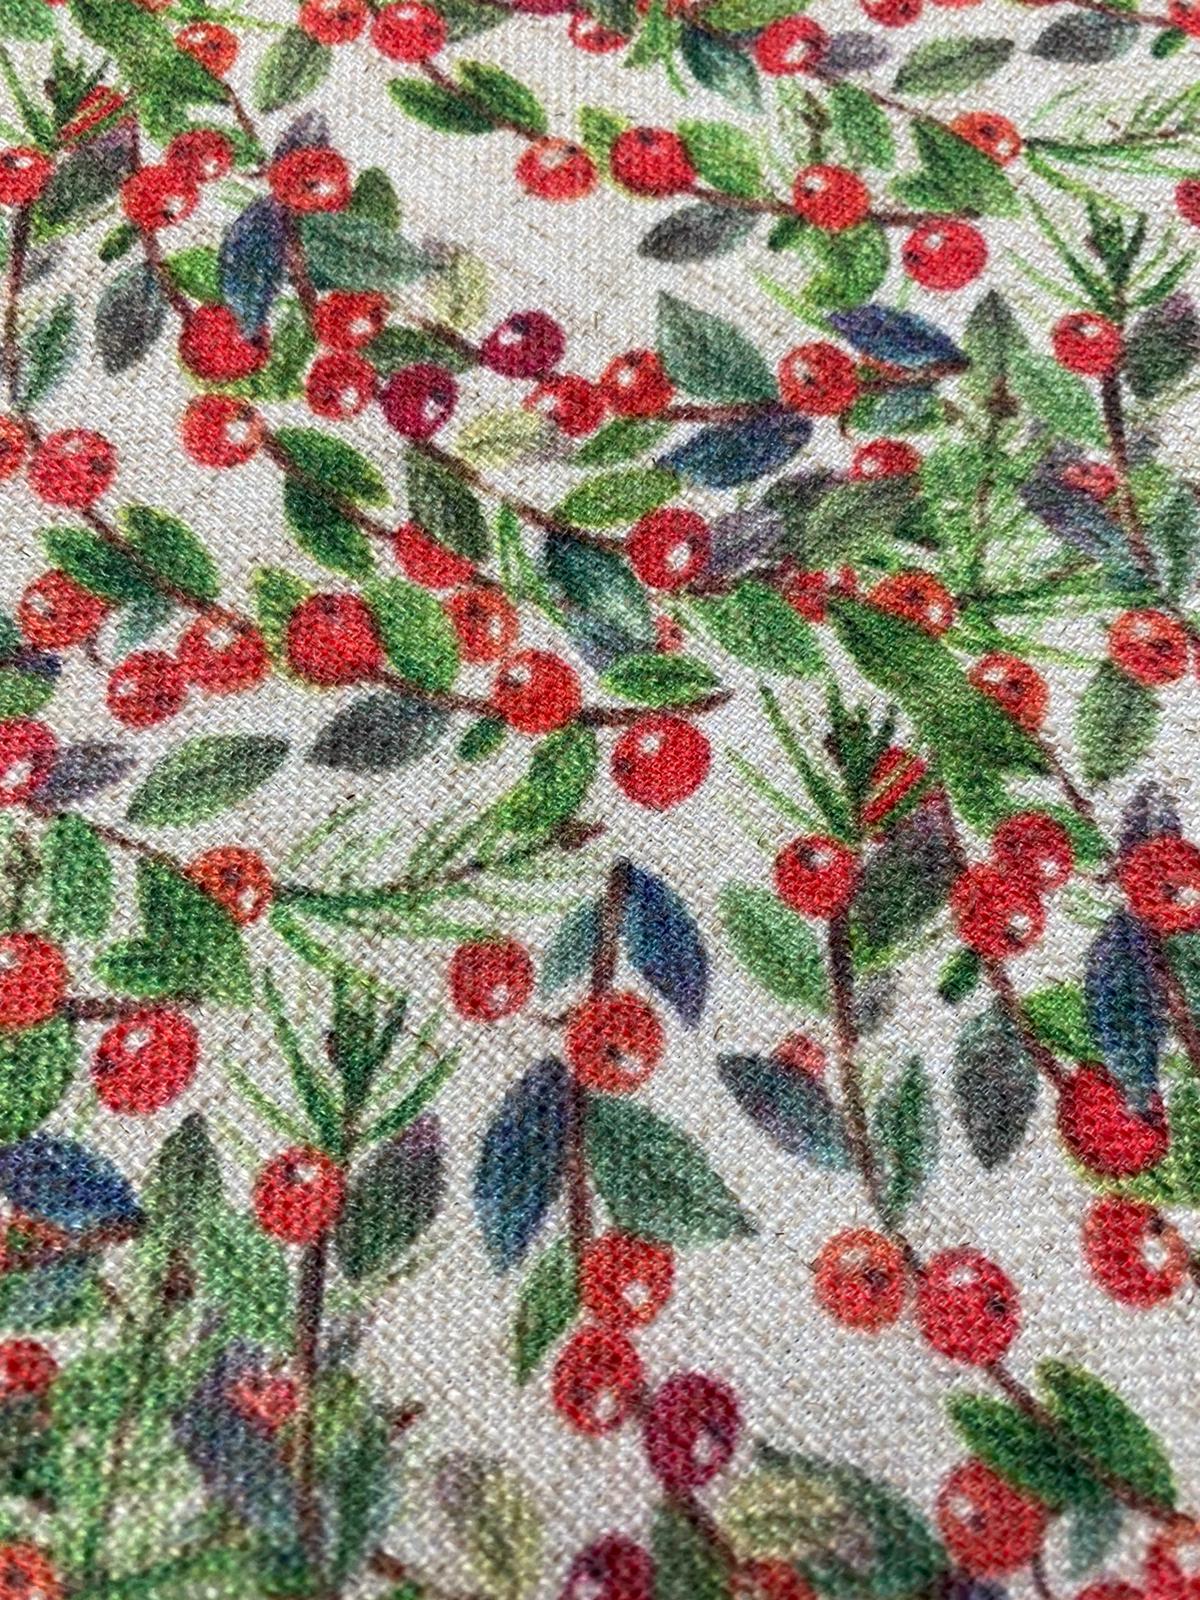 Poinsettia and Holly Pattern Table Cloth, 55"W x 86"L - Wear Sierra